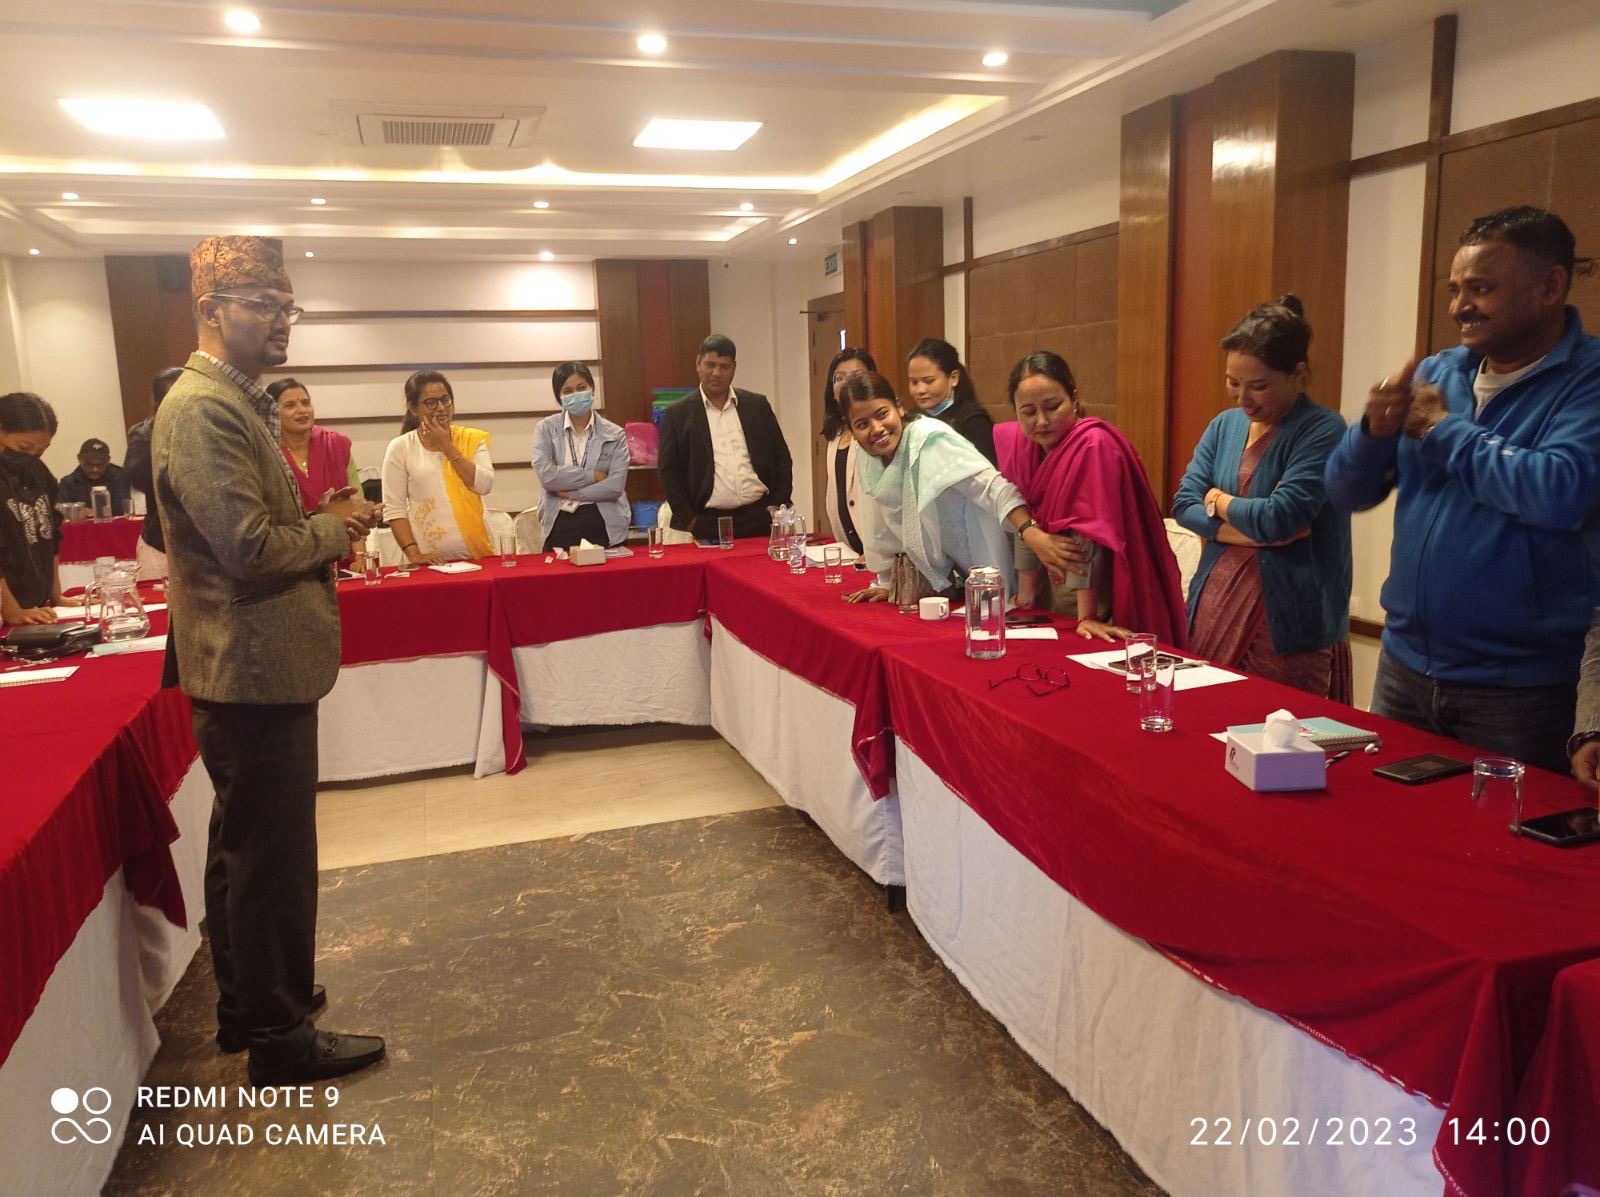 नेपालगञ्जका स्वास्थ्य संस्थाहरुकालागि फोहोरमैला व्यवस्थापन सम्बन्धी अभिमुखिकरण कार्यक्रम